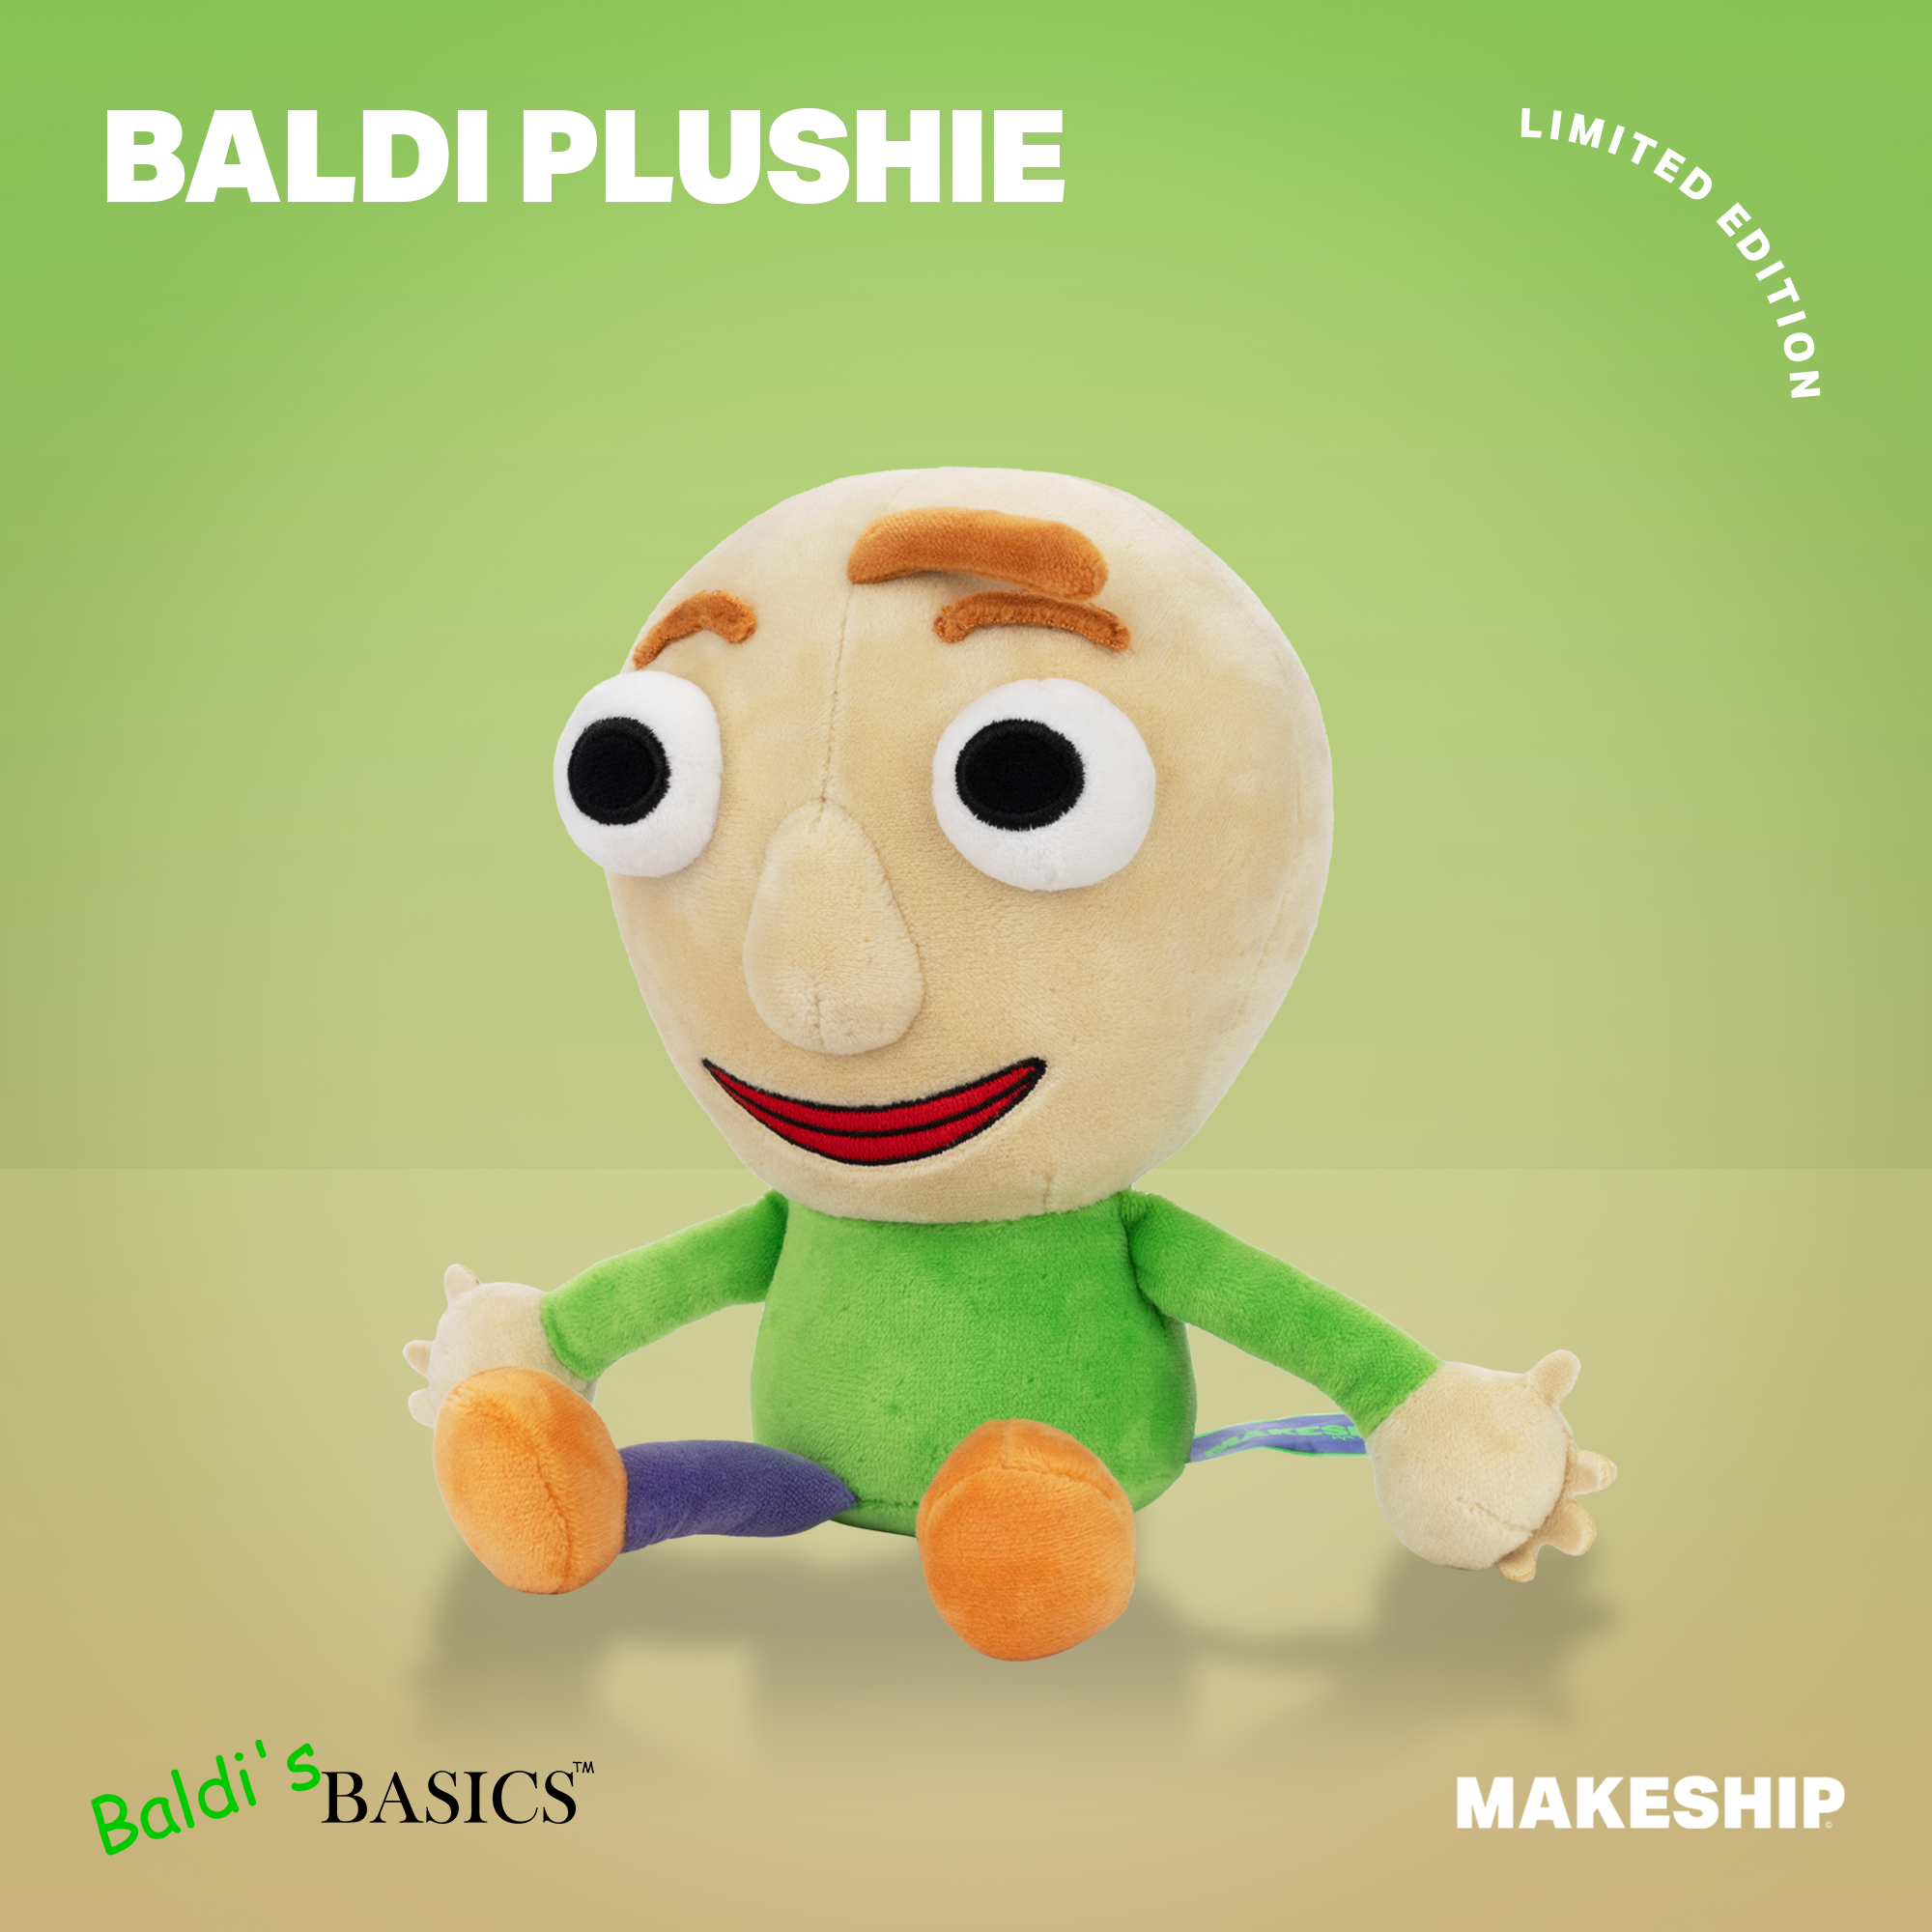 NEW FINAL UPDATE!! ALL ENDINGS?! Baldi's Basics Classic Remastered